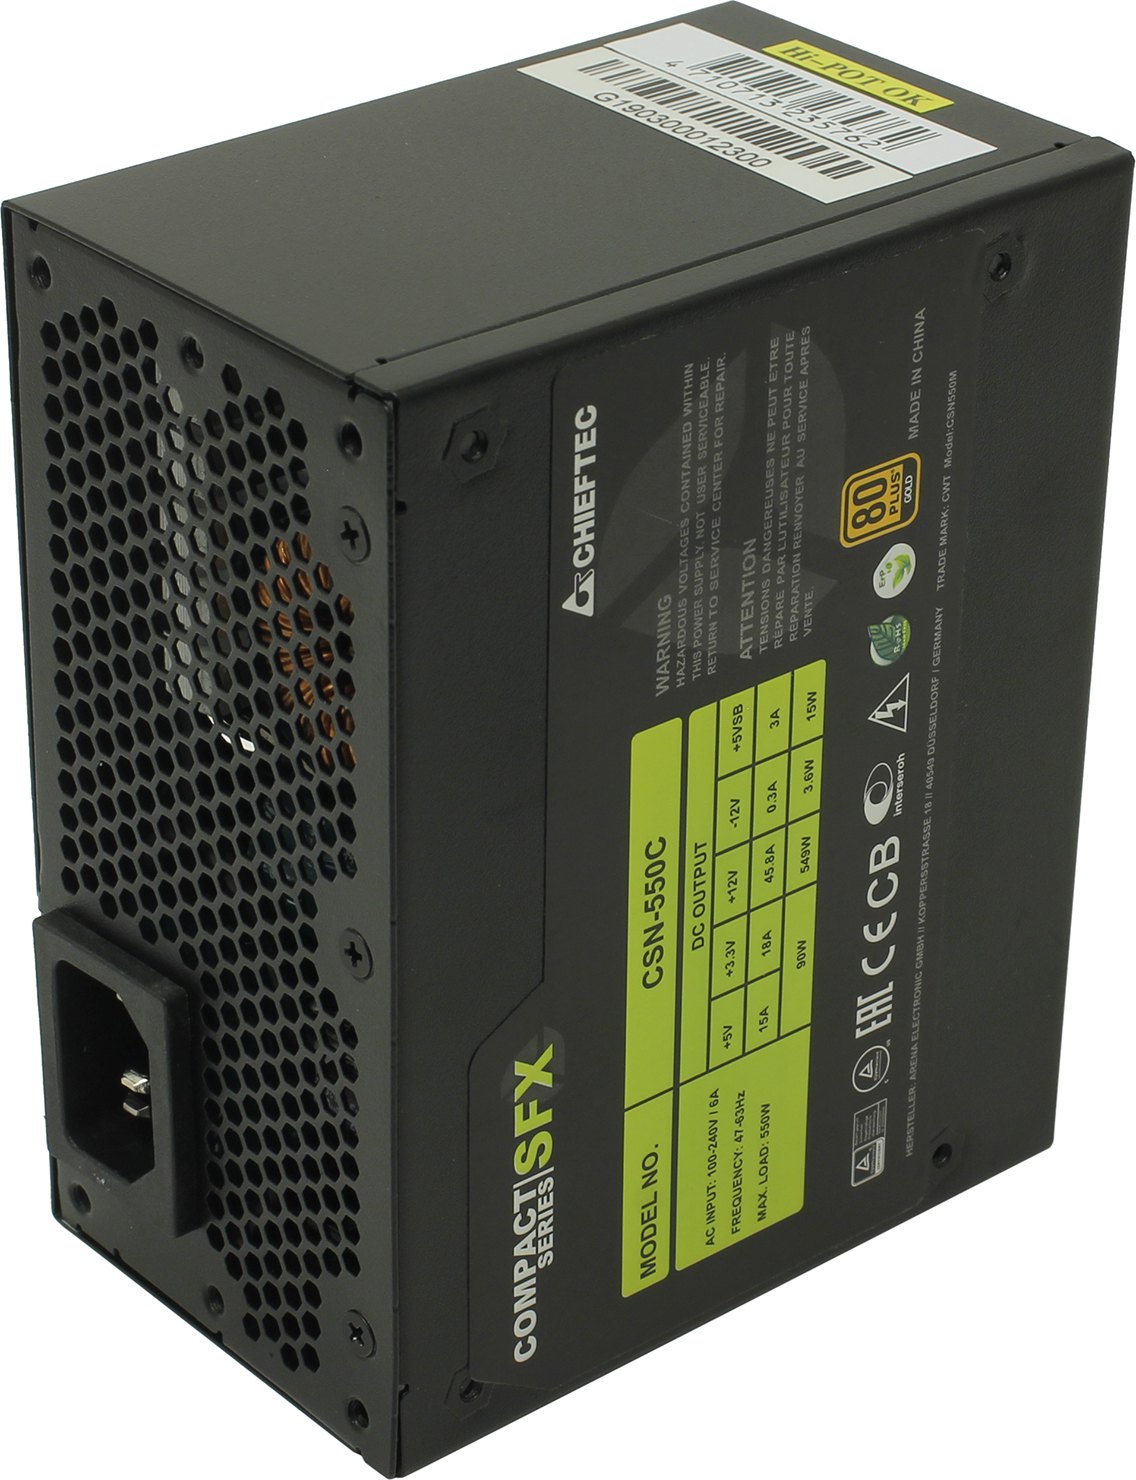 Блок питания Chieftec Compact CSN-550C SFX 80PLUS GOLD 550W Box